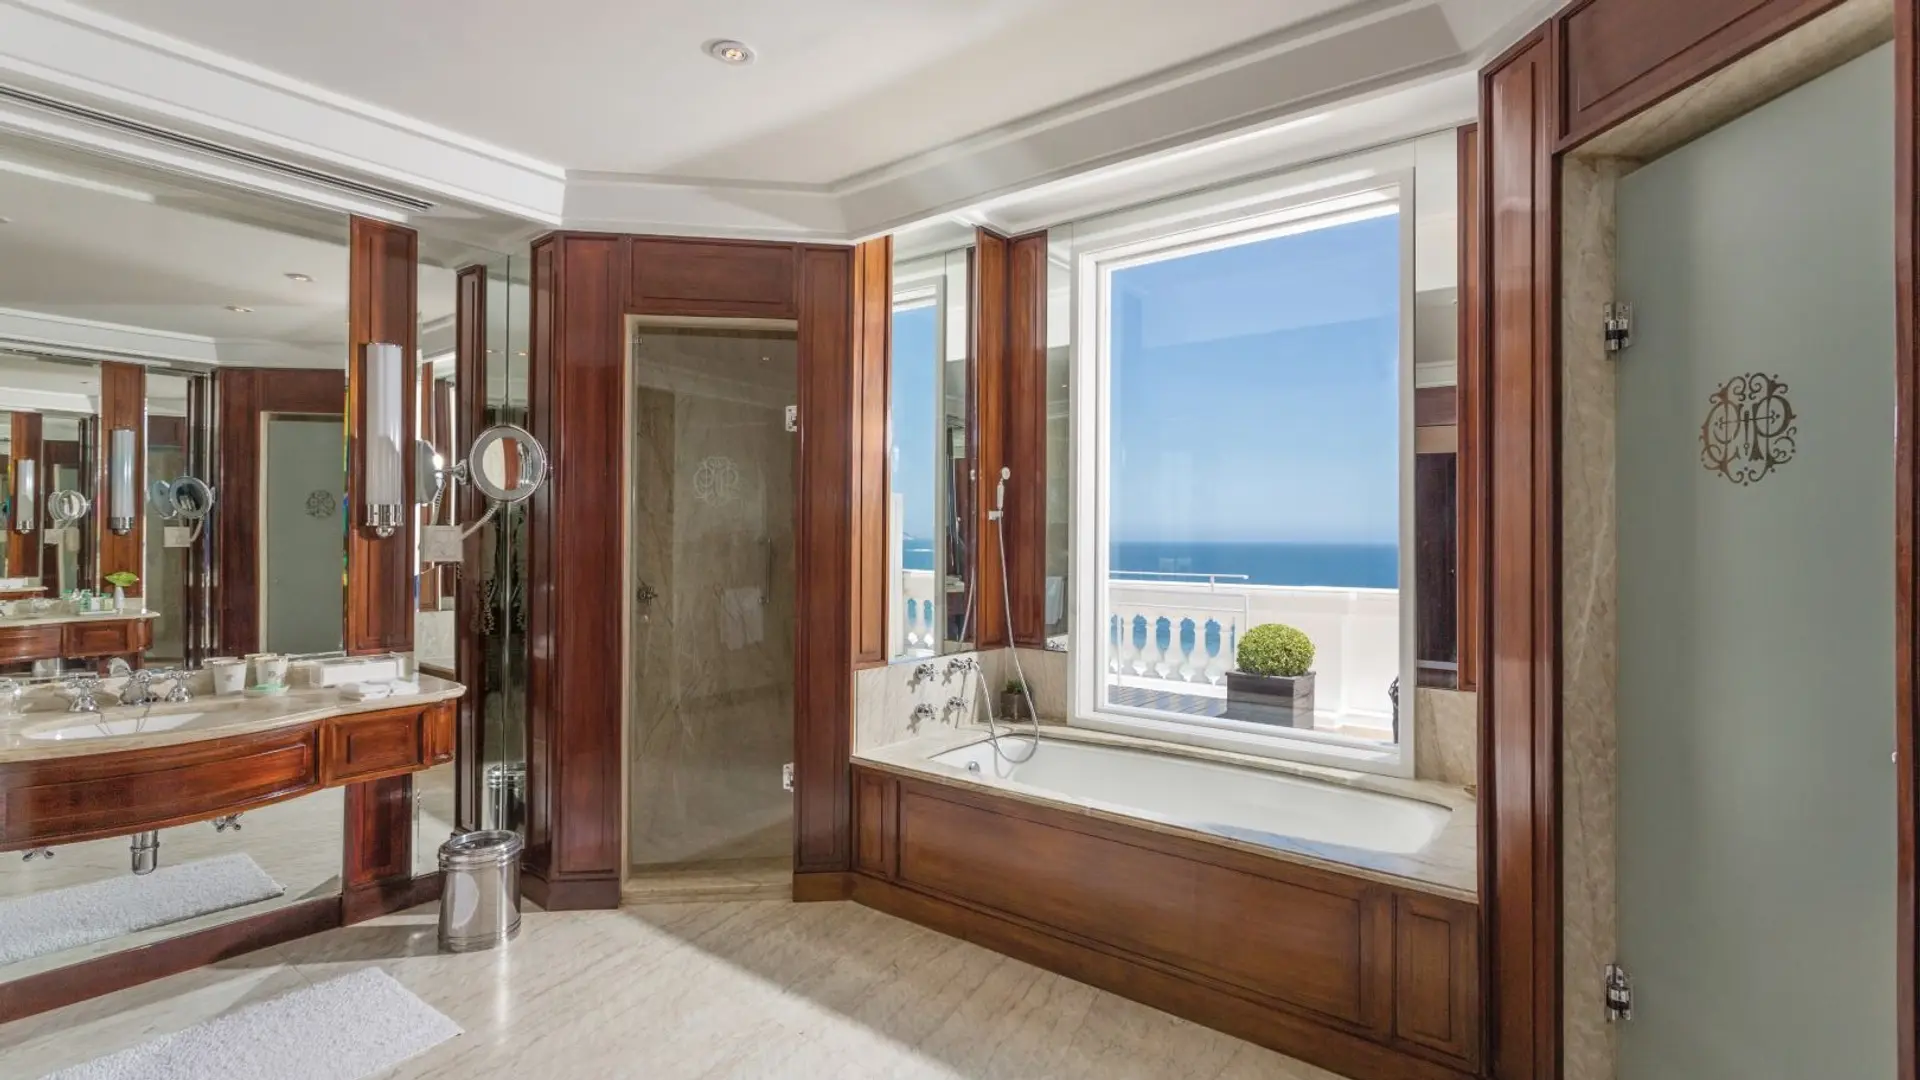 Hotel review Accommodation' - Copacabana Palace - a Belmond Hotel - 1